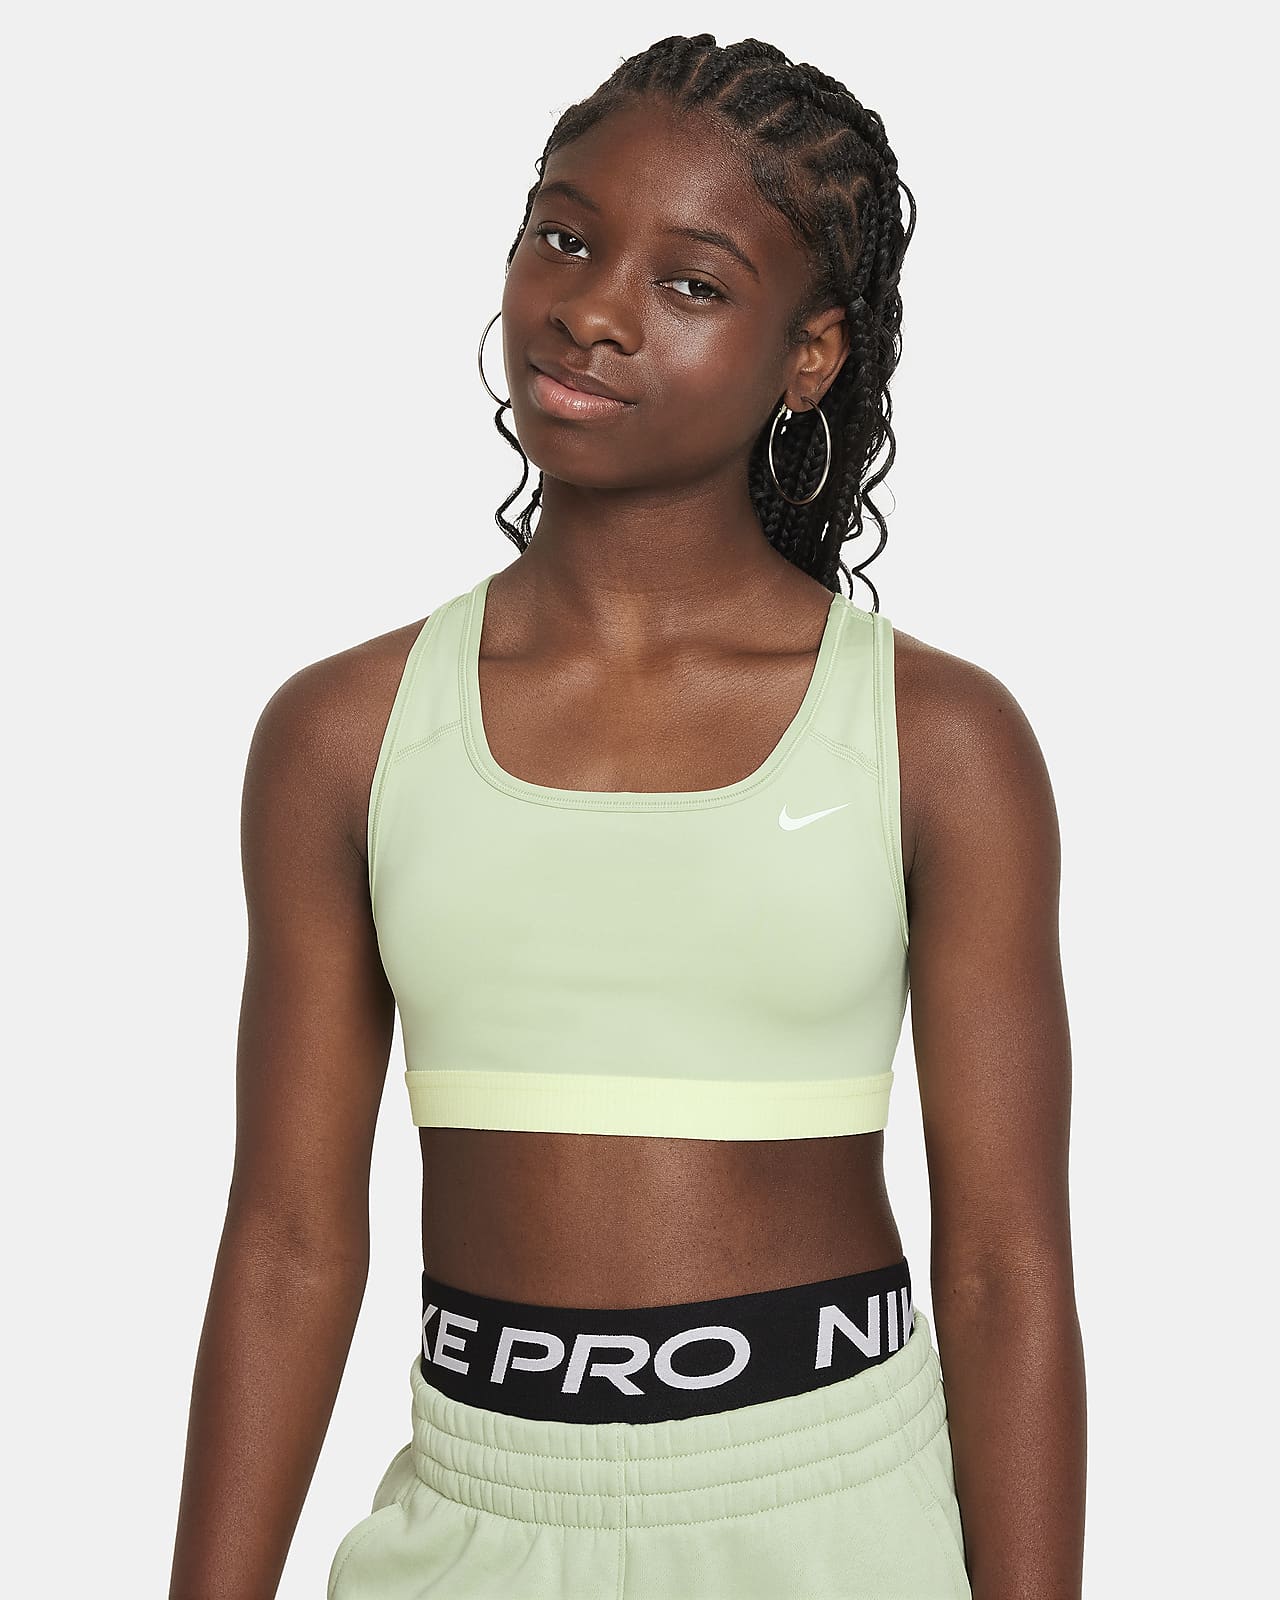 Nike Underwear, Bras & Socks for Young Adult Women